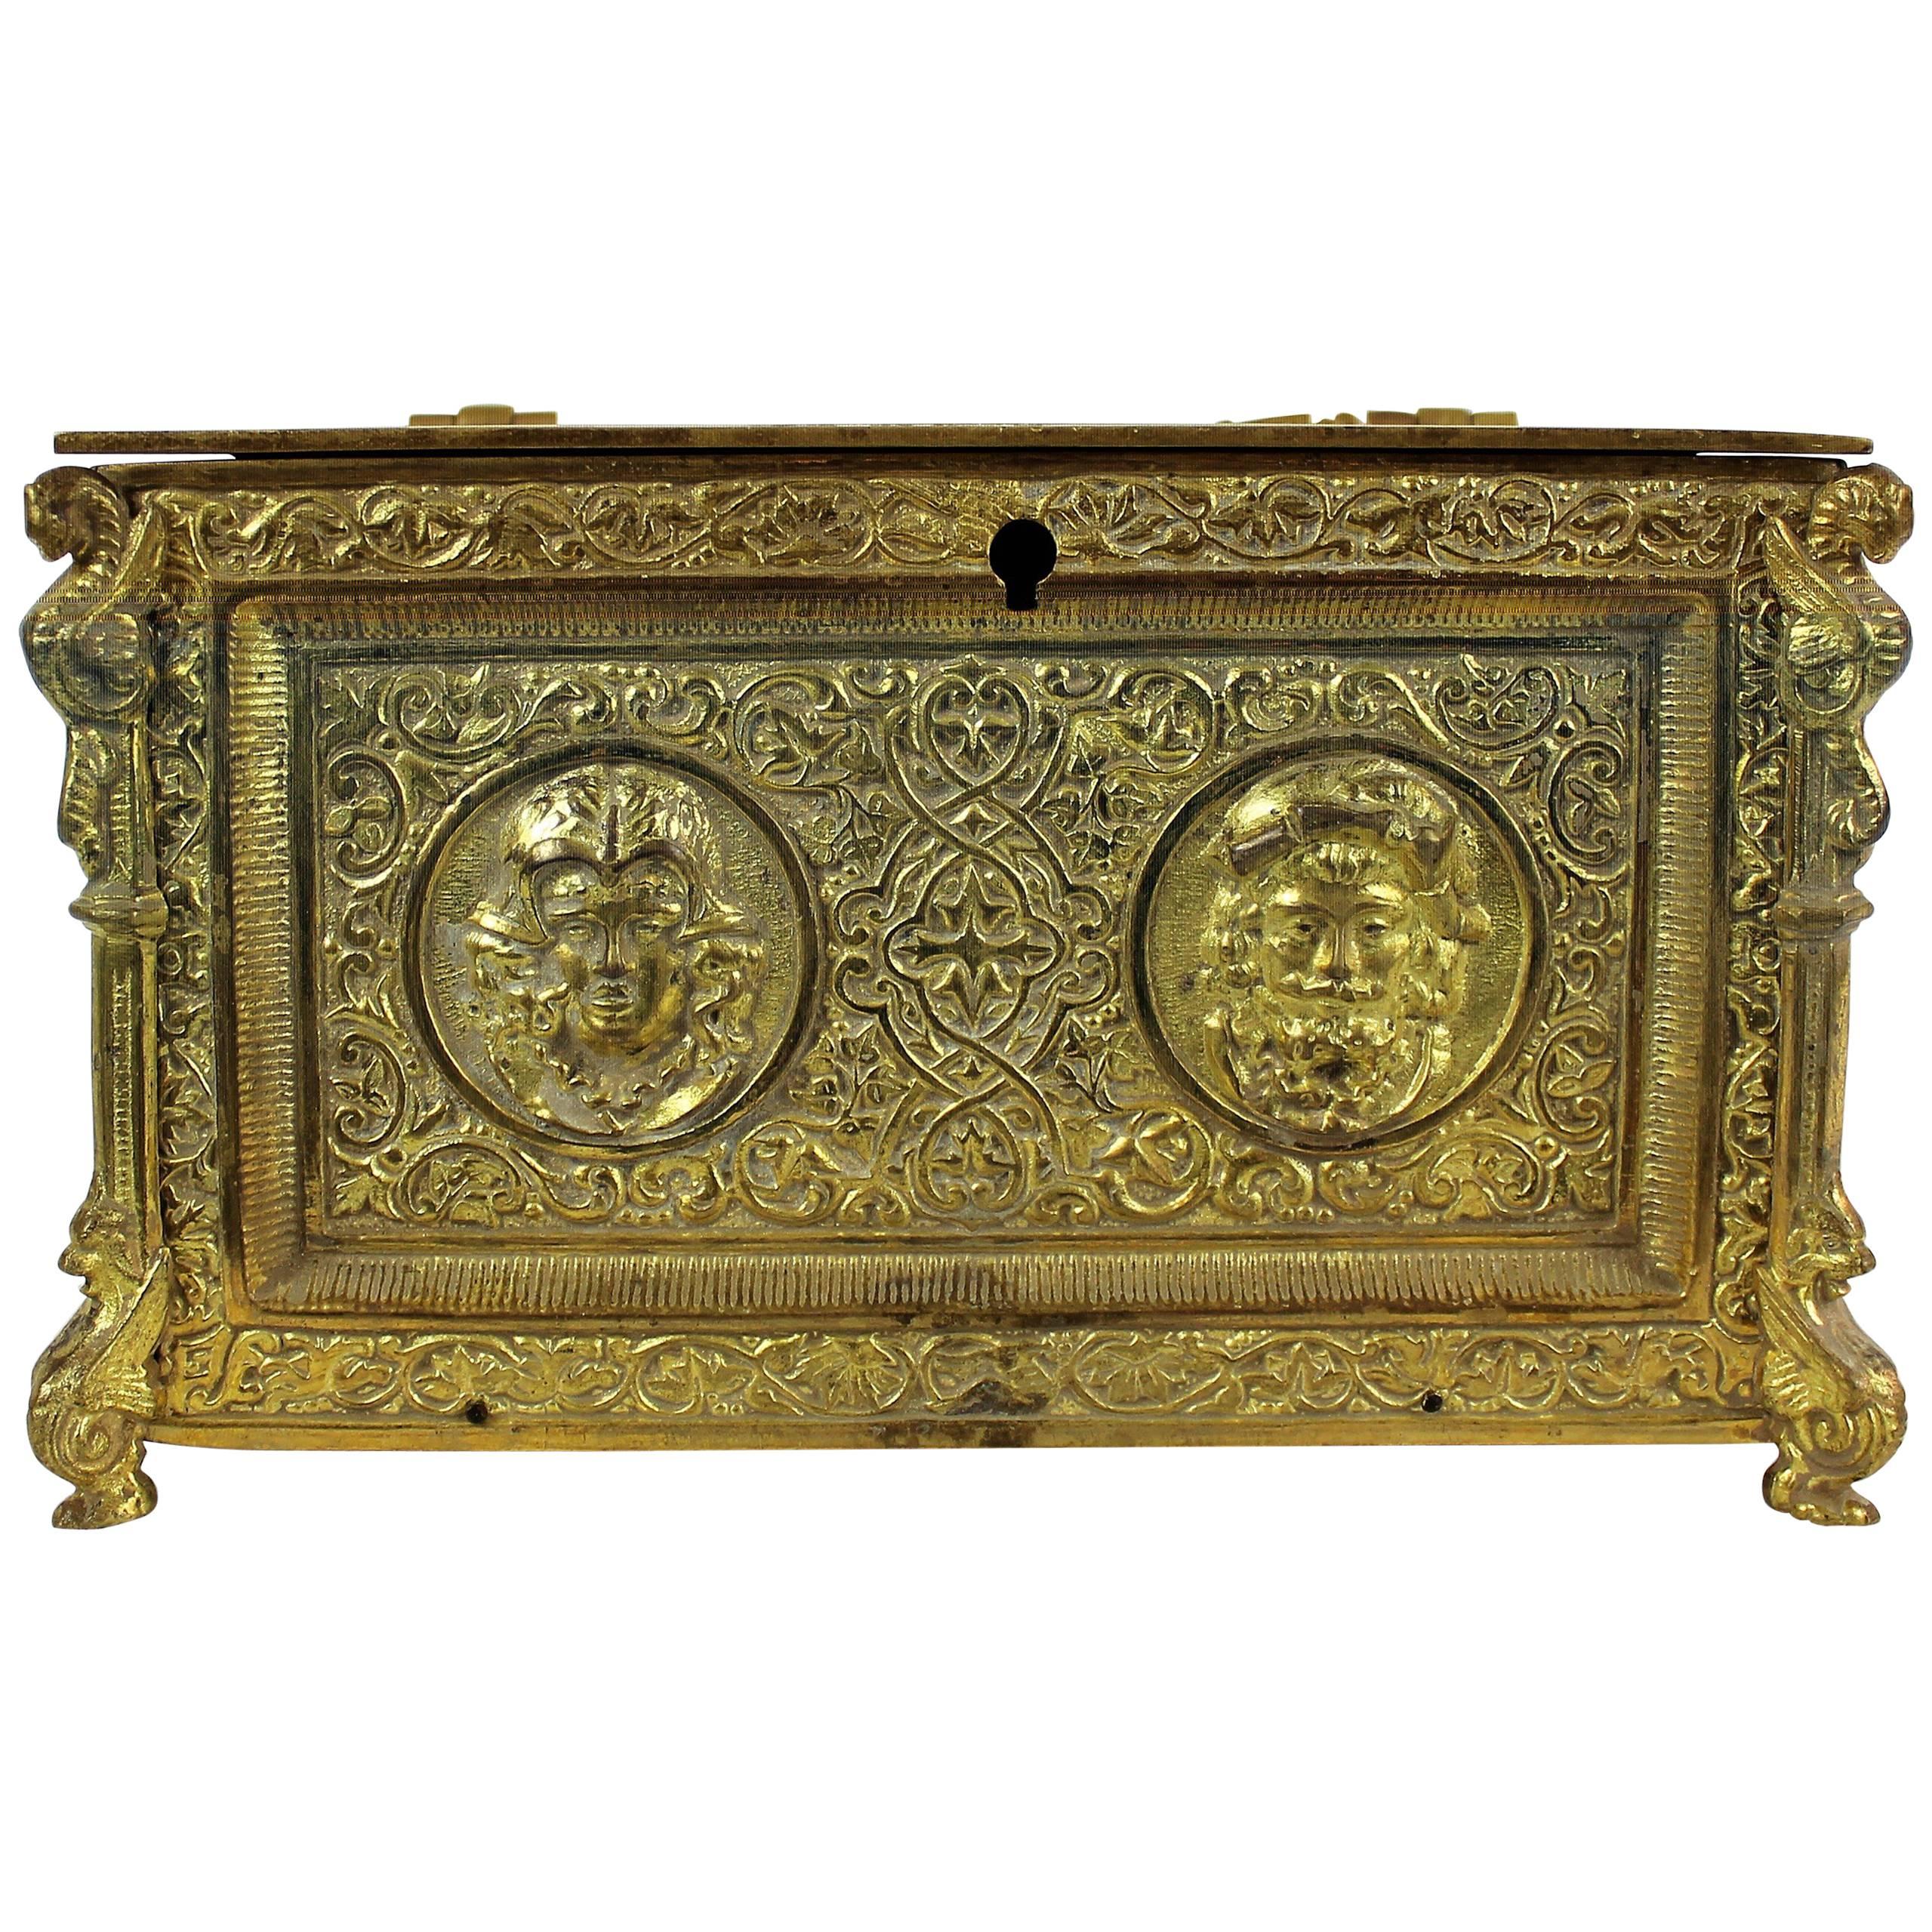 19th Century Renaissance Revival Bronze Jewelry Box with Decoration of Mascaron